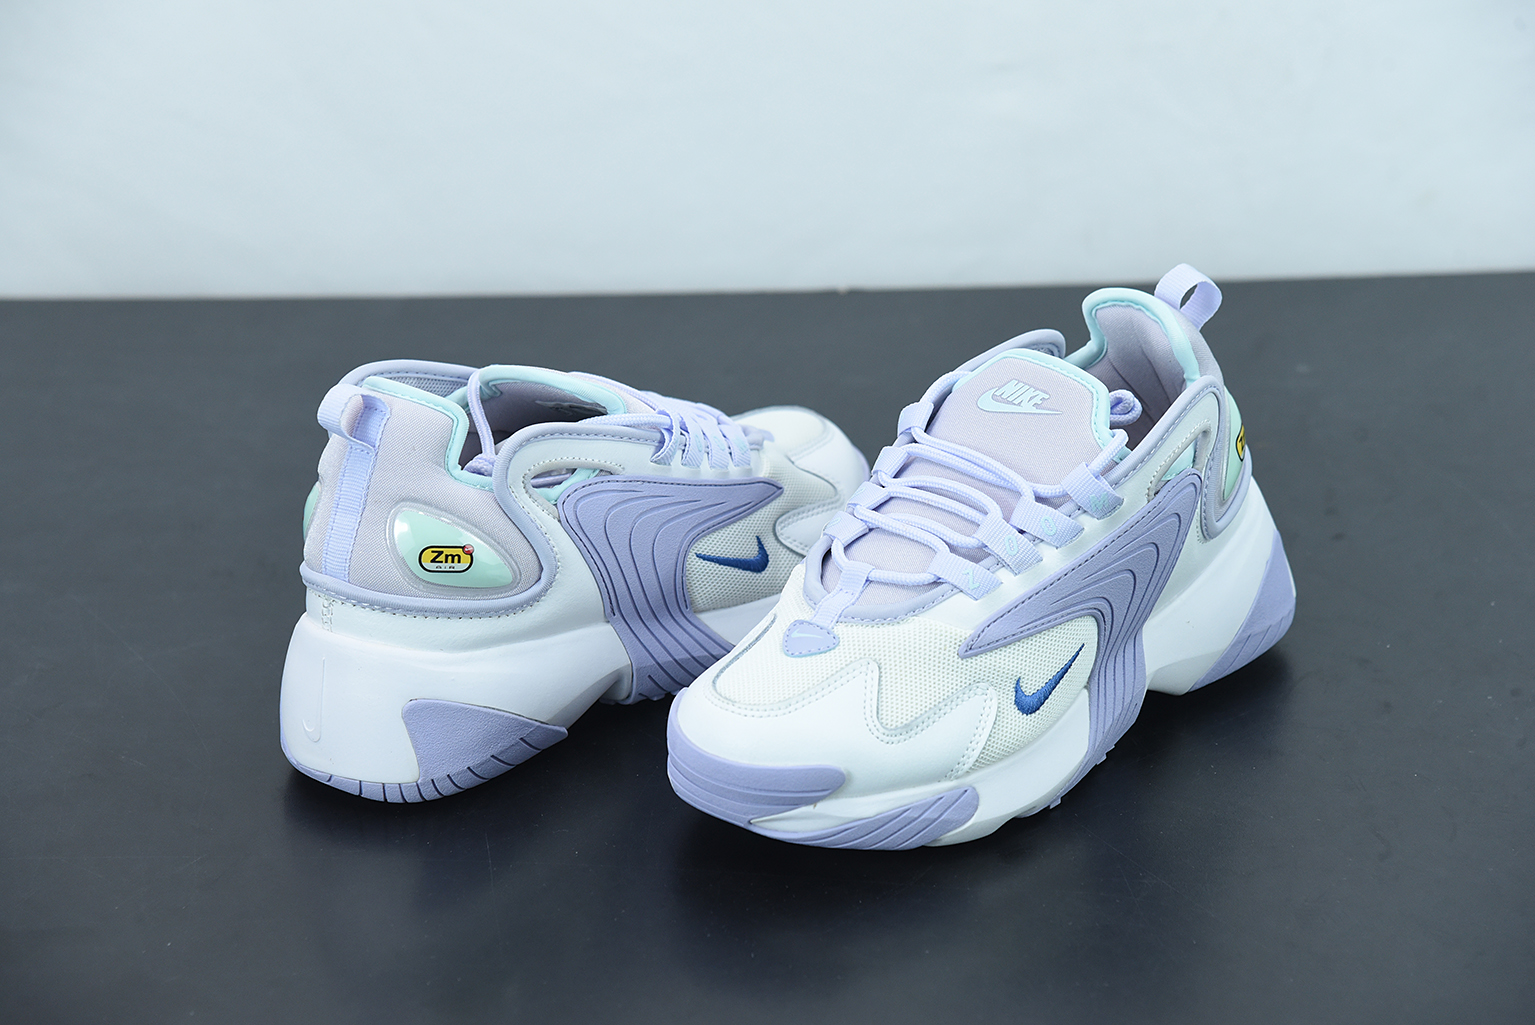 Nike Air 97 UL 17 White Marathon Running Shoes Sneakers BV6666-106 - 103 For Sale – The Nike Air Huarache Mowabb Gets A May Drop - Nike Zoom 2K 'Oxygen Purple' AO0354